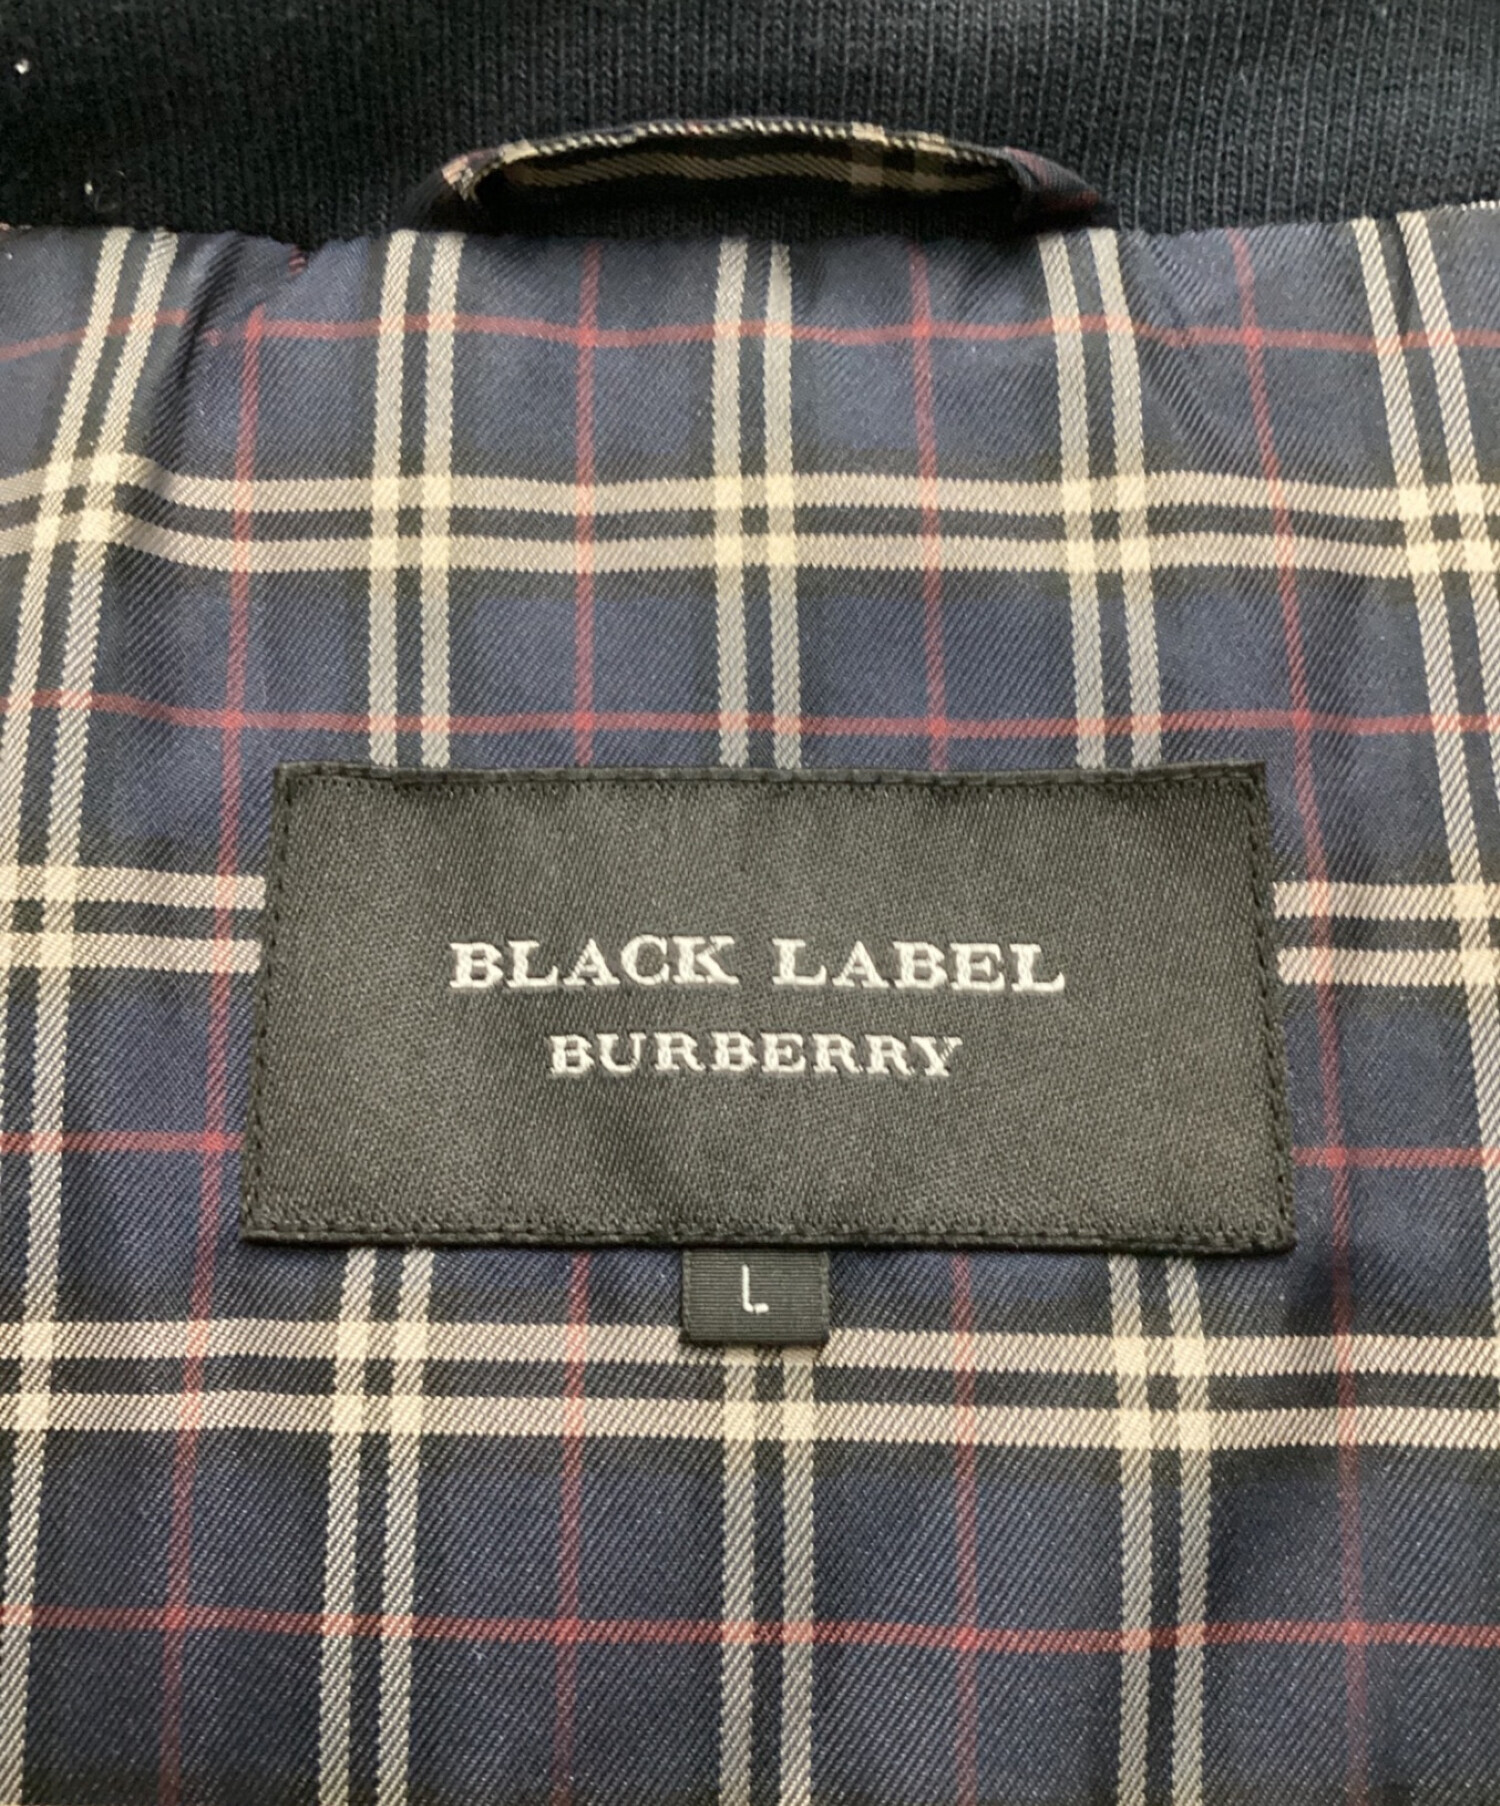 BURBERRY BLACK LABEL (バーバリーブラックレーベル) ライナー付きダウンジャケット ネイビー サイズ:L